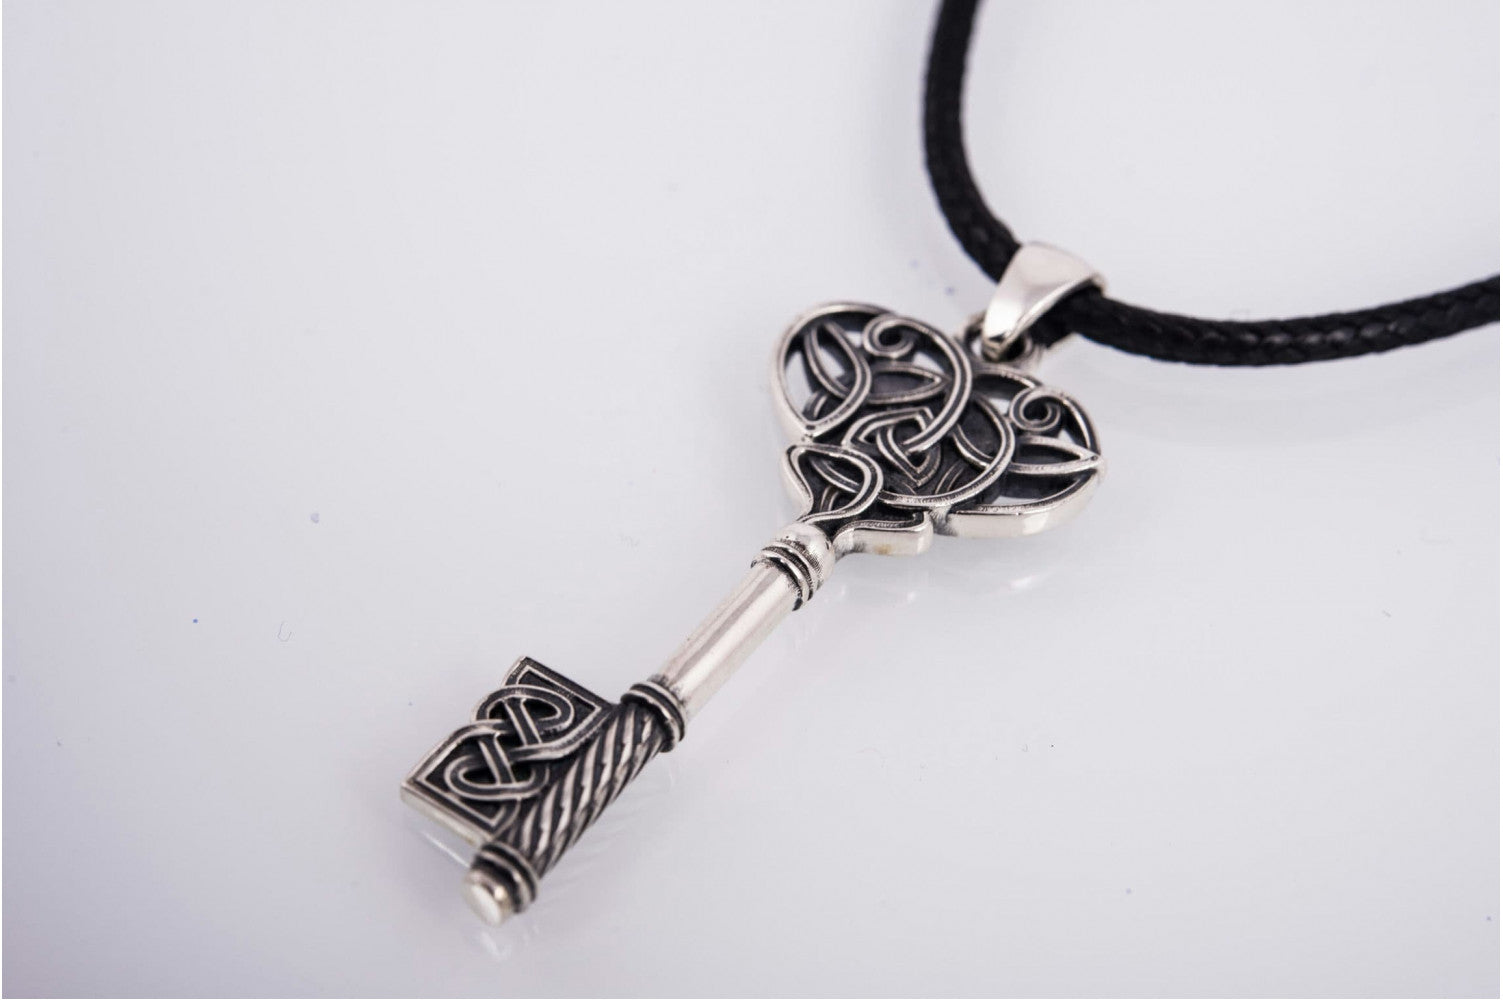 Unique Handmade Viking Pendant with Celtic knots and Triquetra symbol, 925 silver jewelry - vikingworkshop